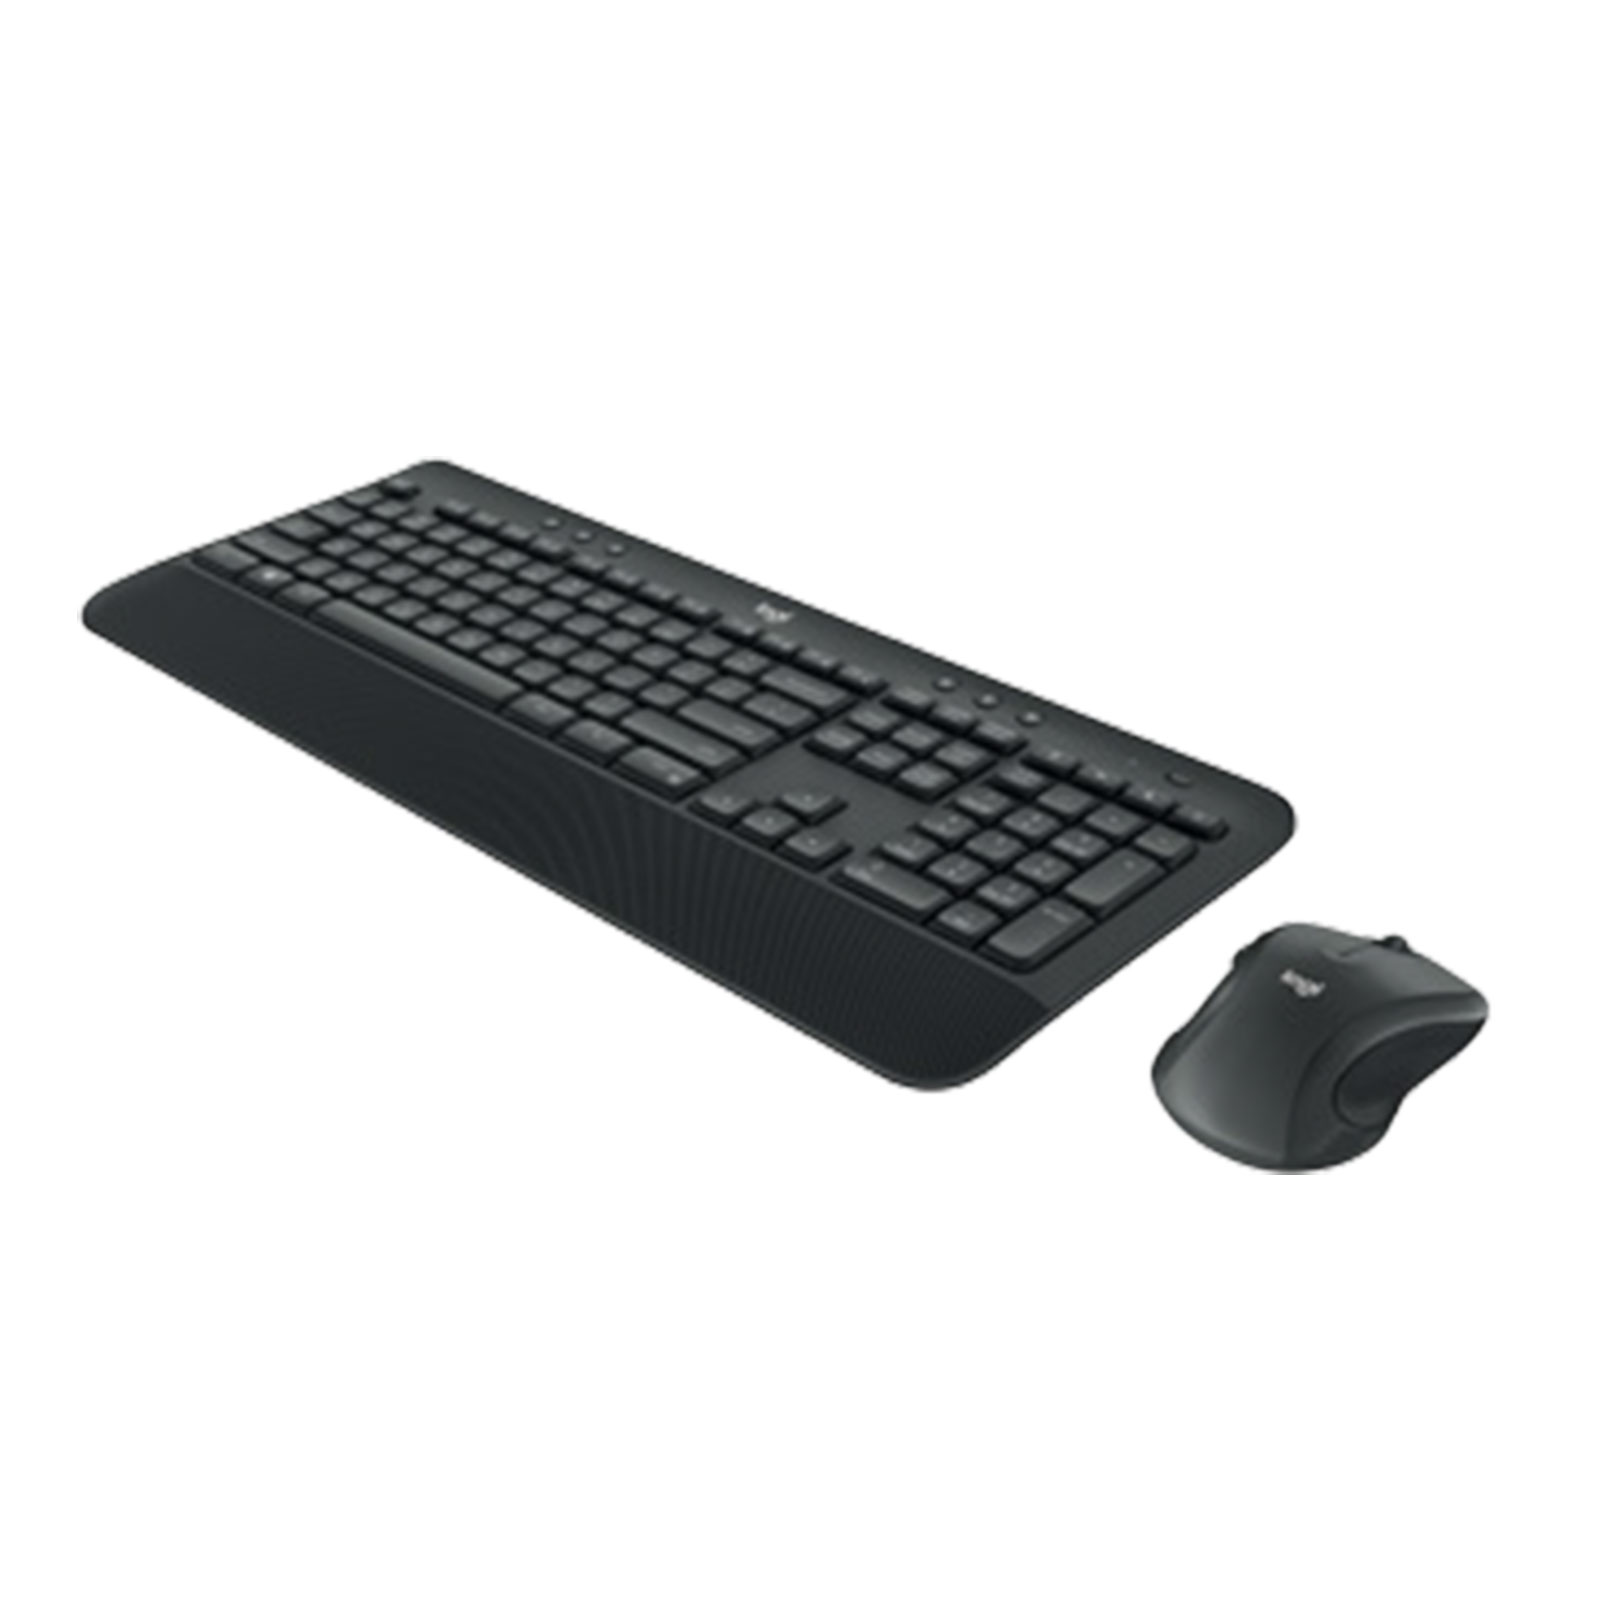 Logitech MK545 Keyboard & Mouse Combo